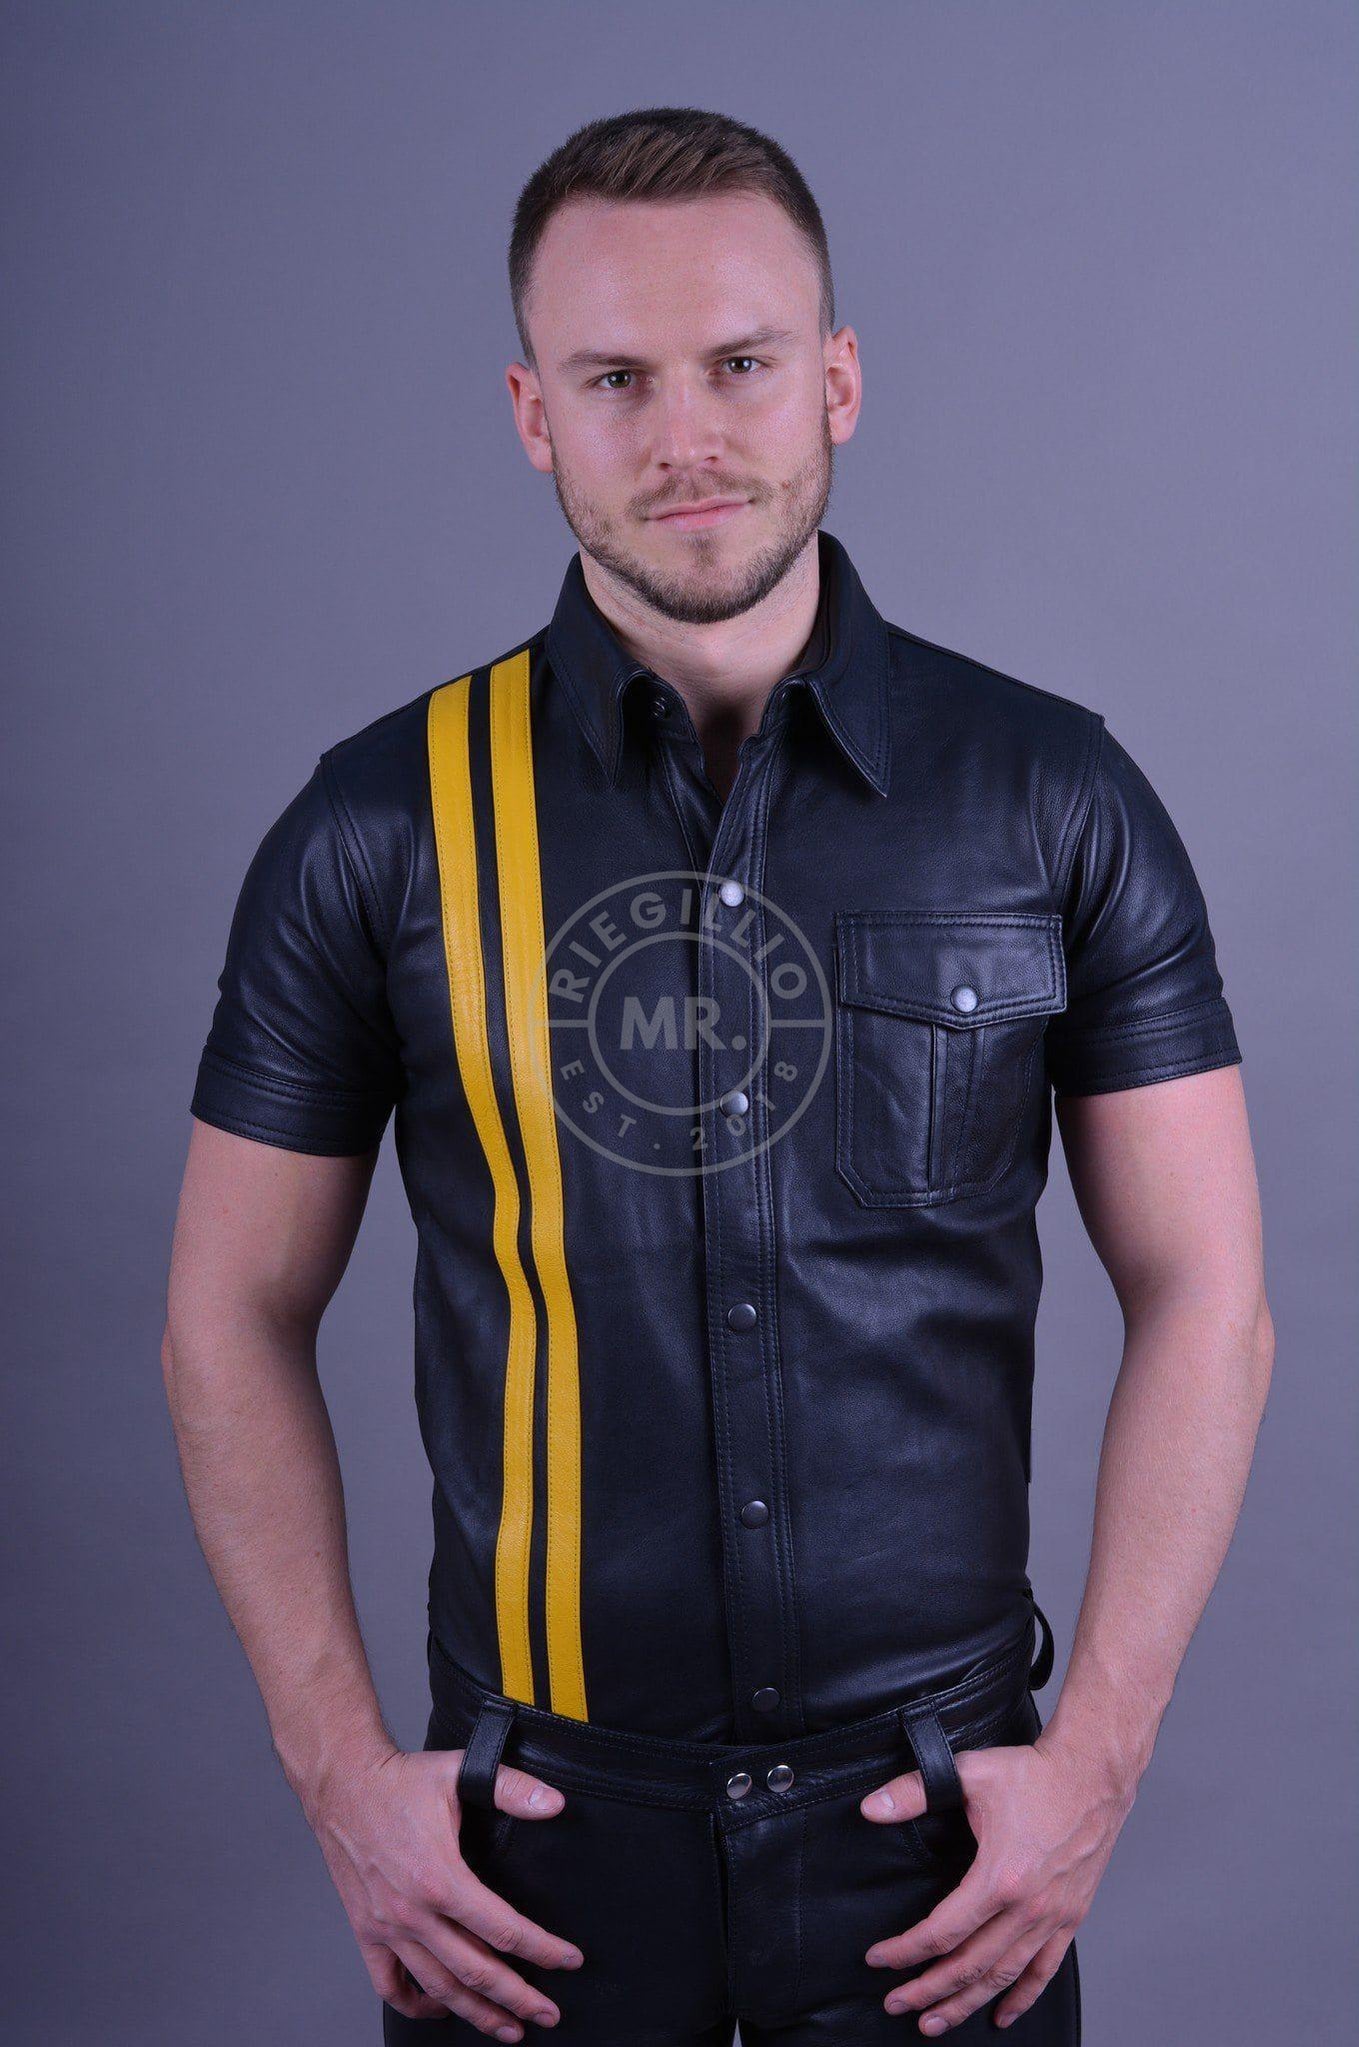 Black Leather Shirt - YELLOW STRIPES at MR. Riegillio